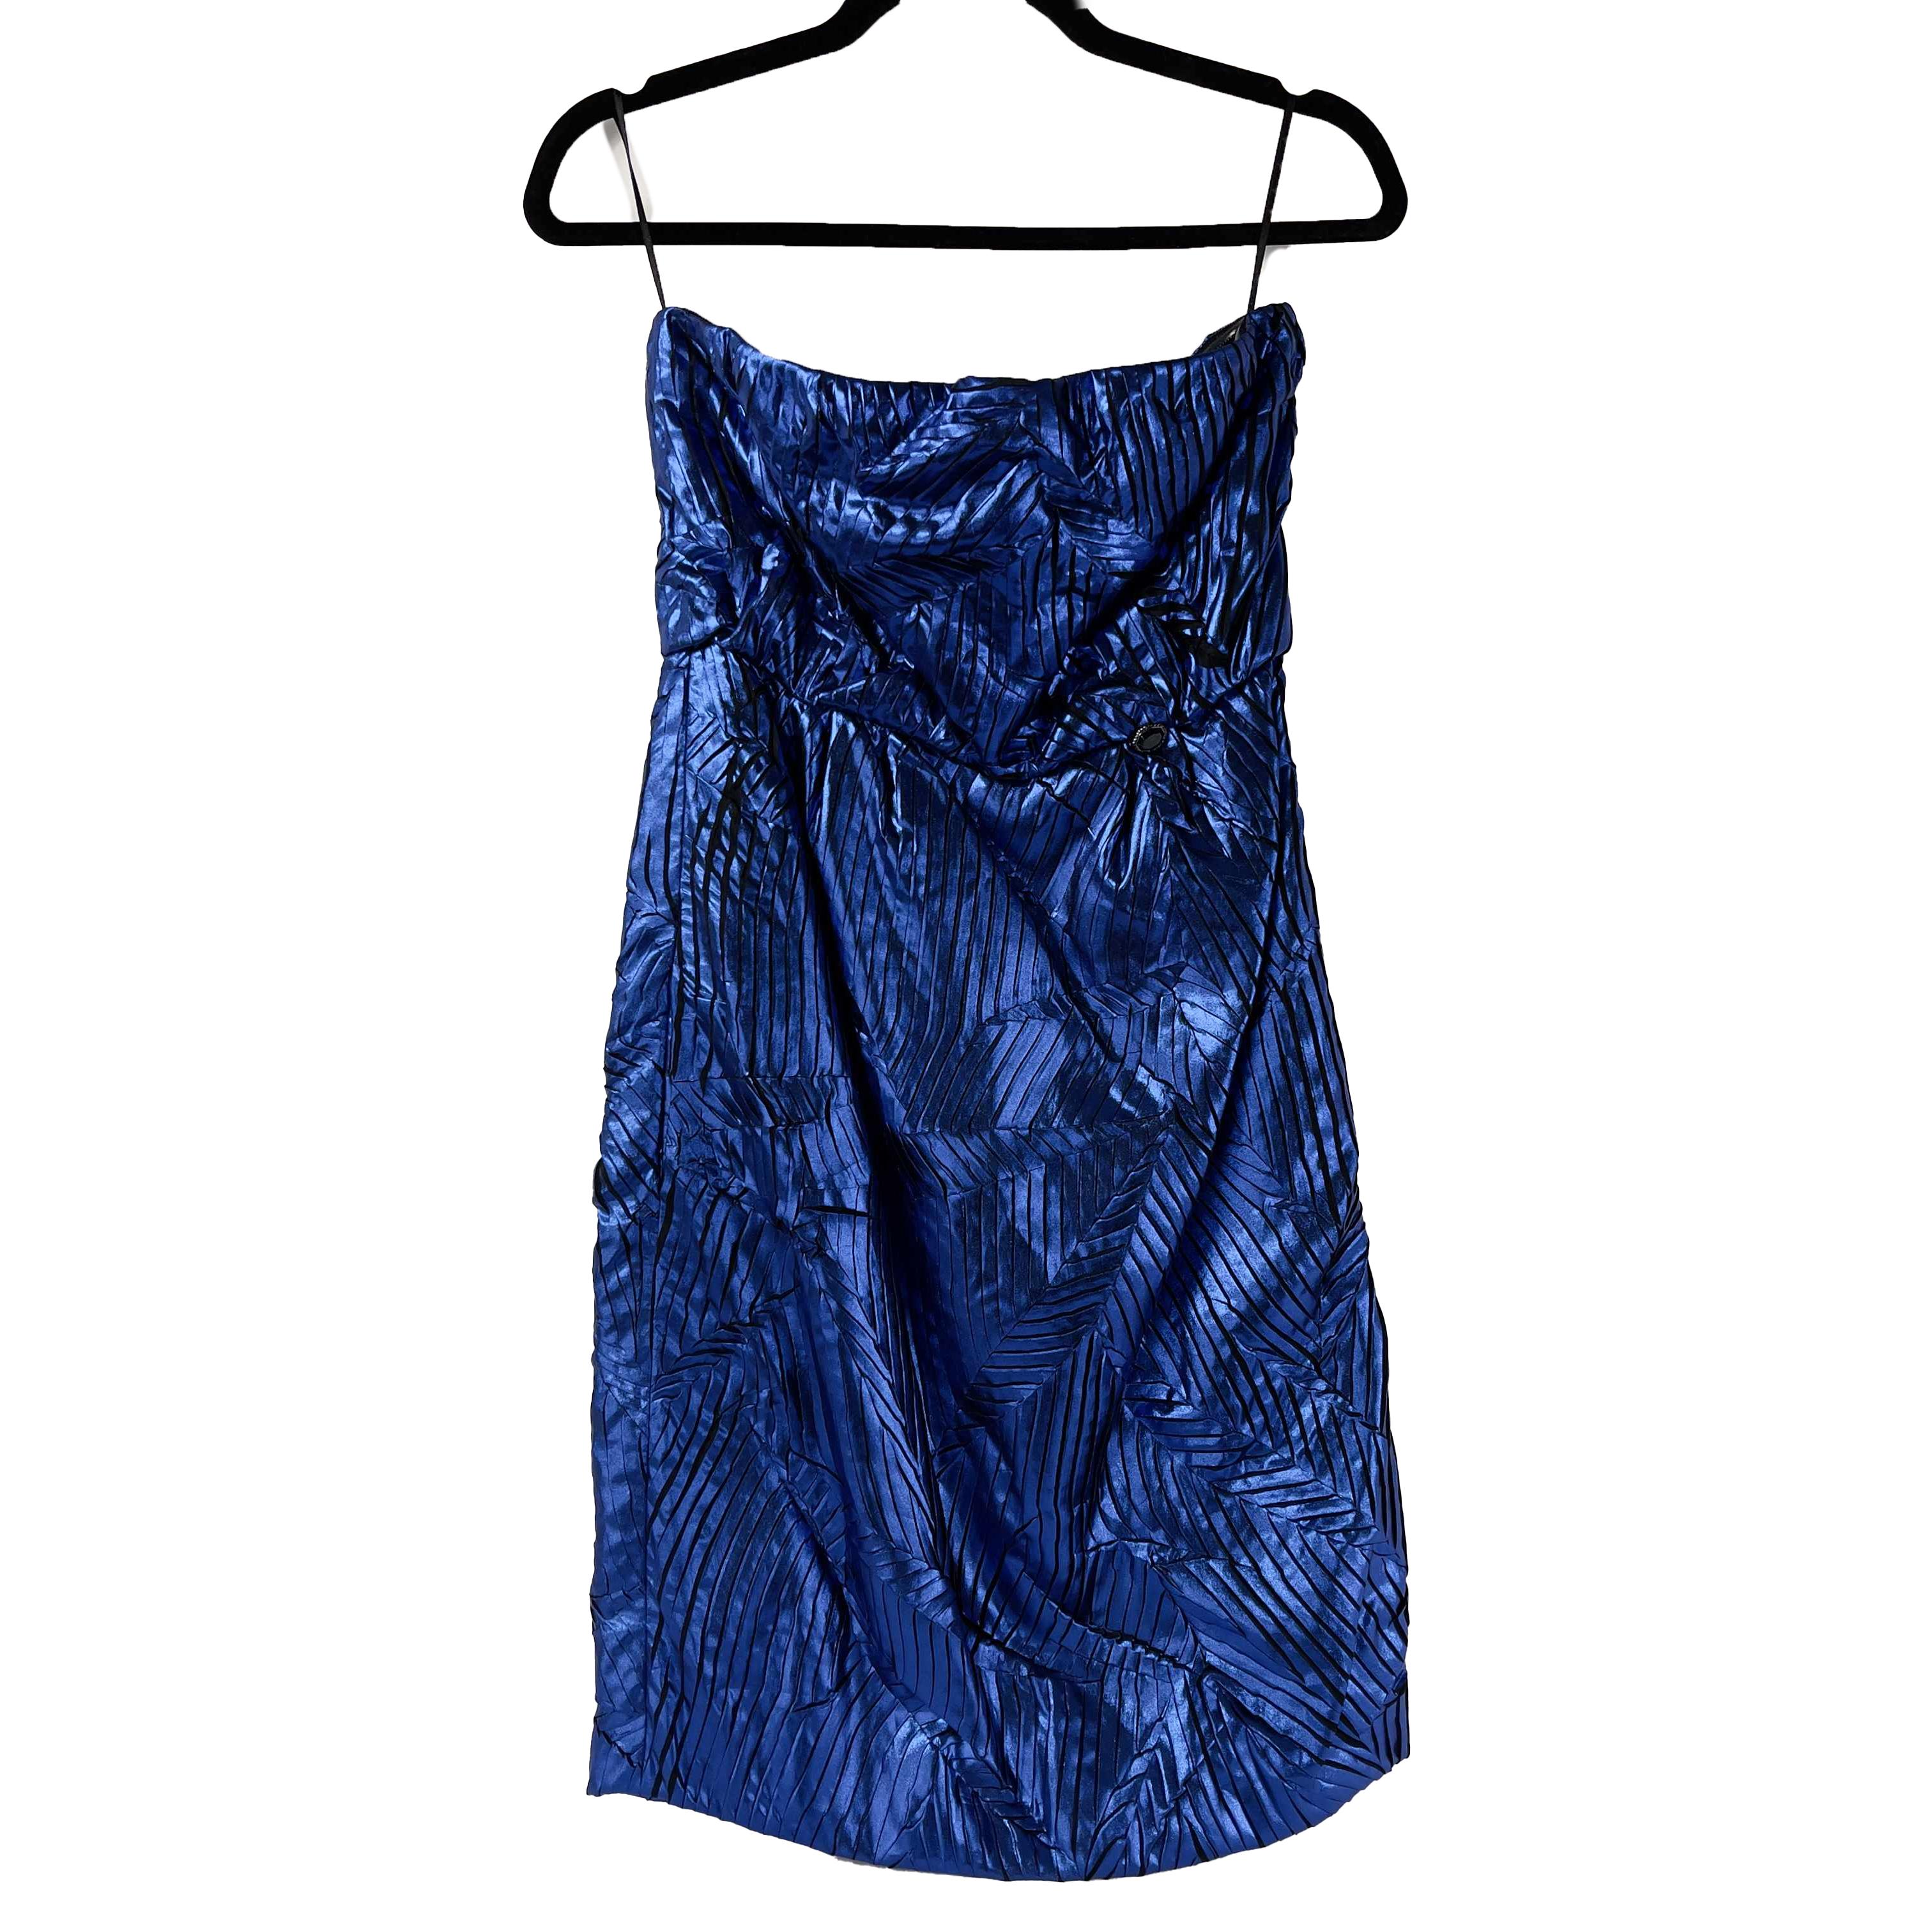 CHANEL Fall 2012 Runway 12A Metallic Strapless Dress Blue Geometric 38 US 6 For Sale 1